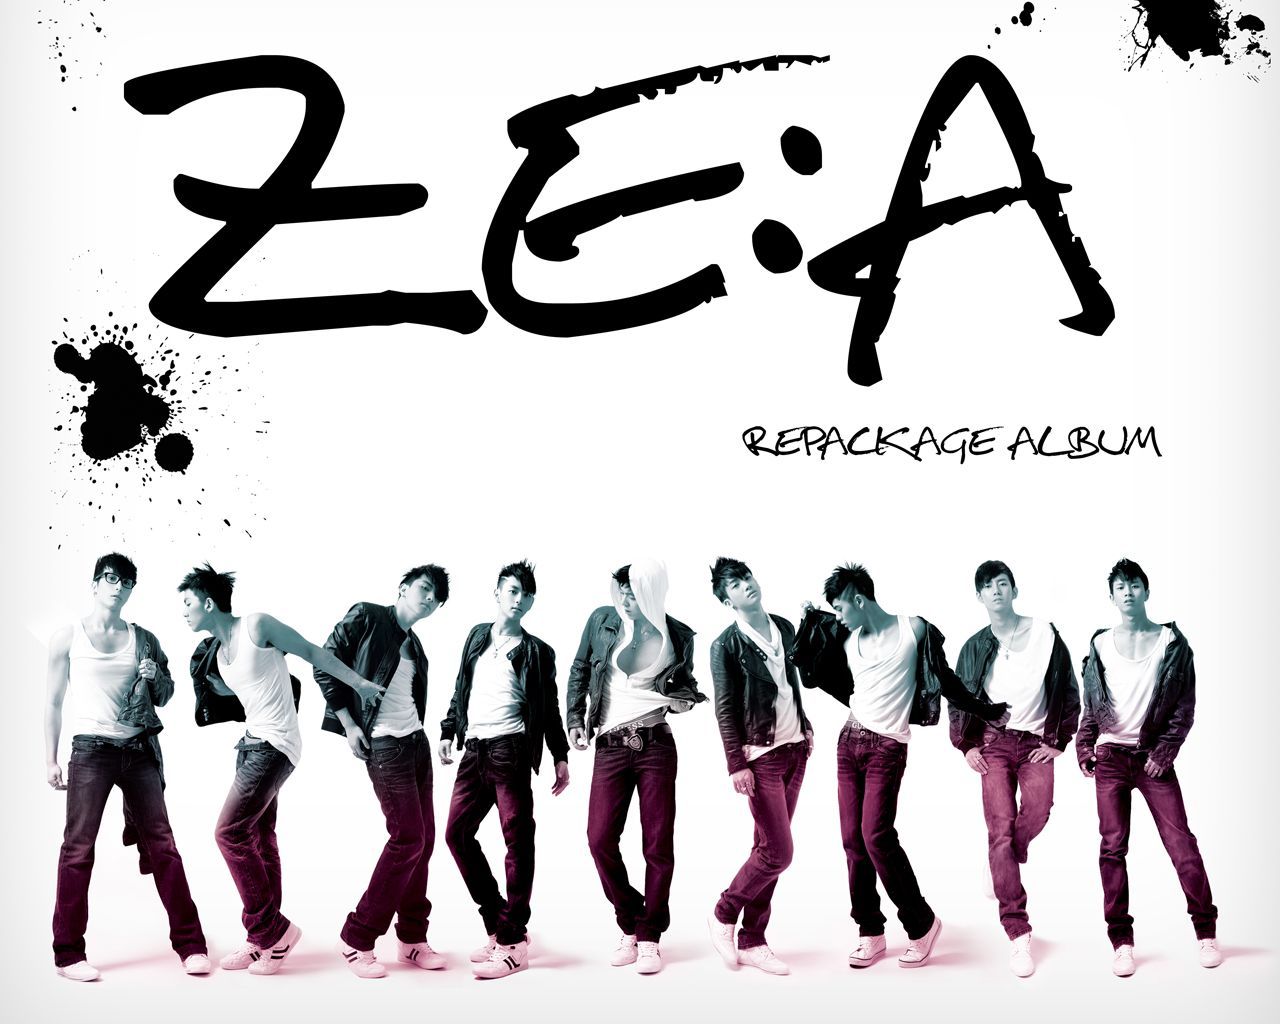 Free Kpop Wallpaper. Download Kpop Wallpaper Repackage Album ZE:A